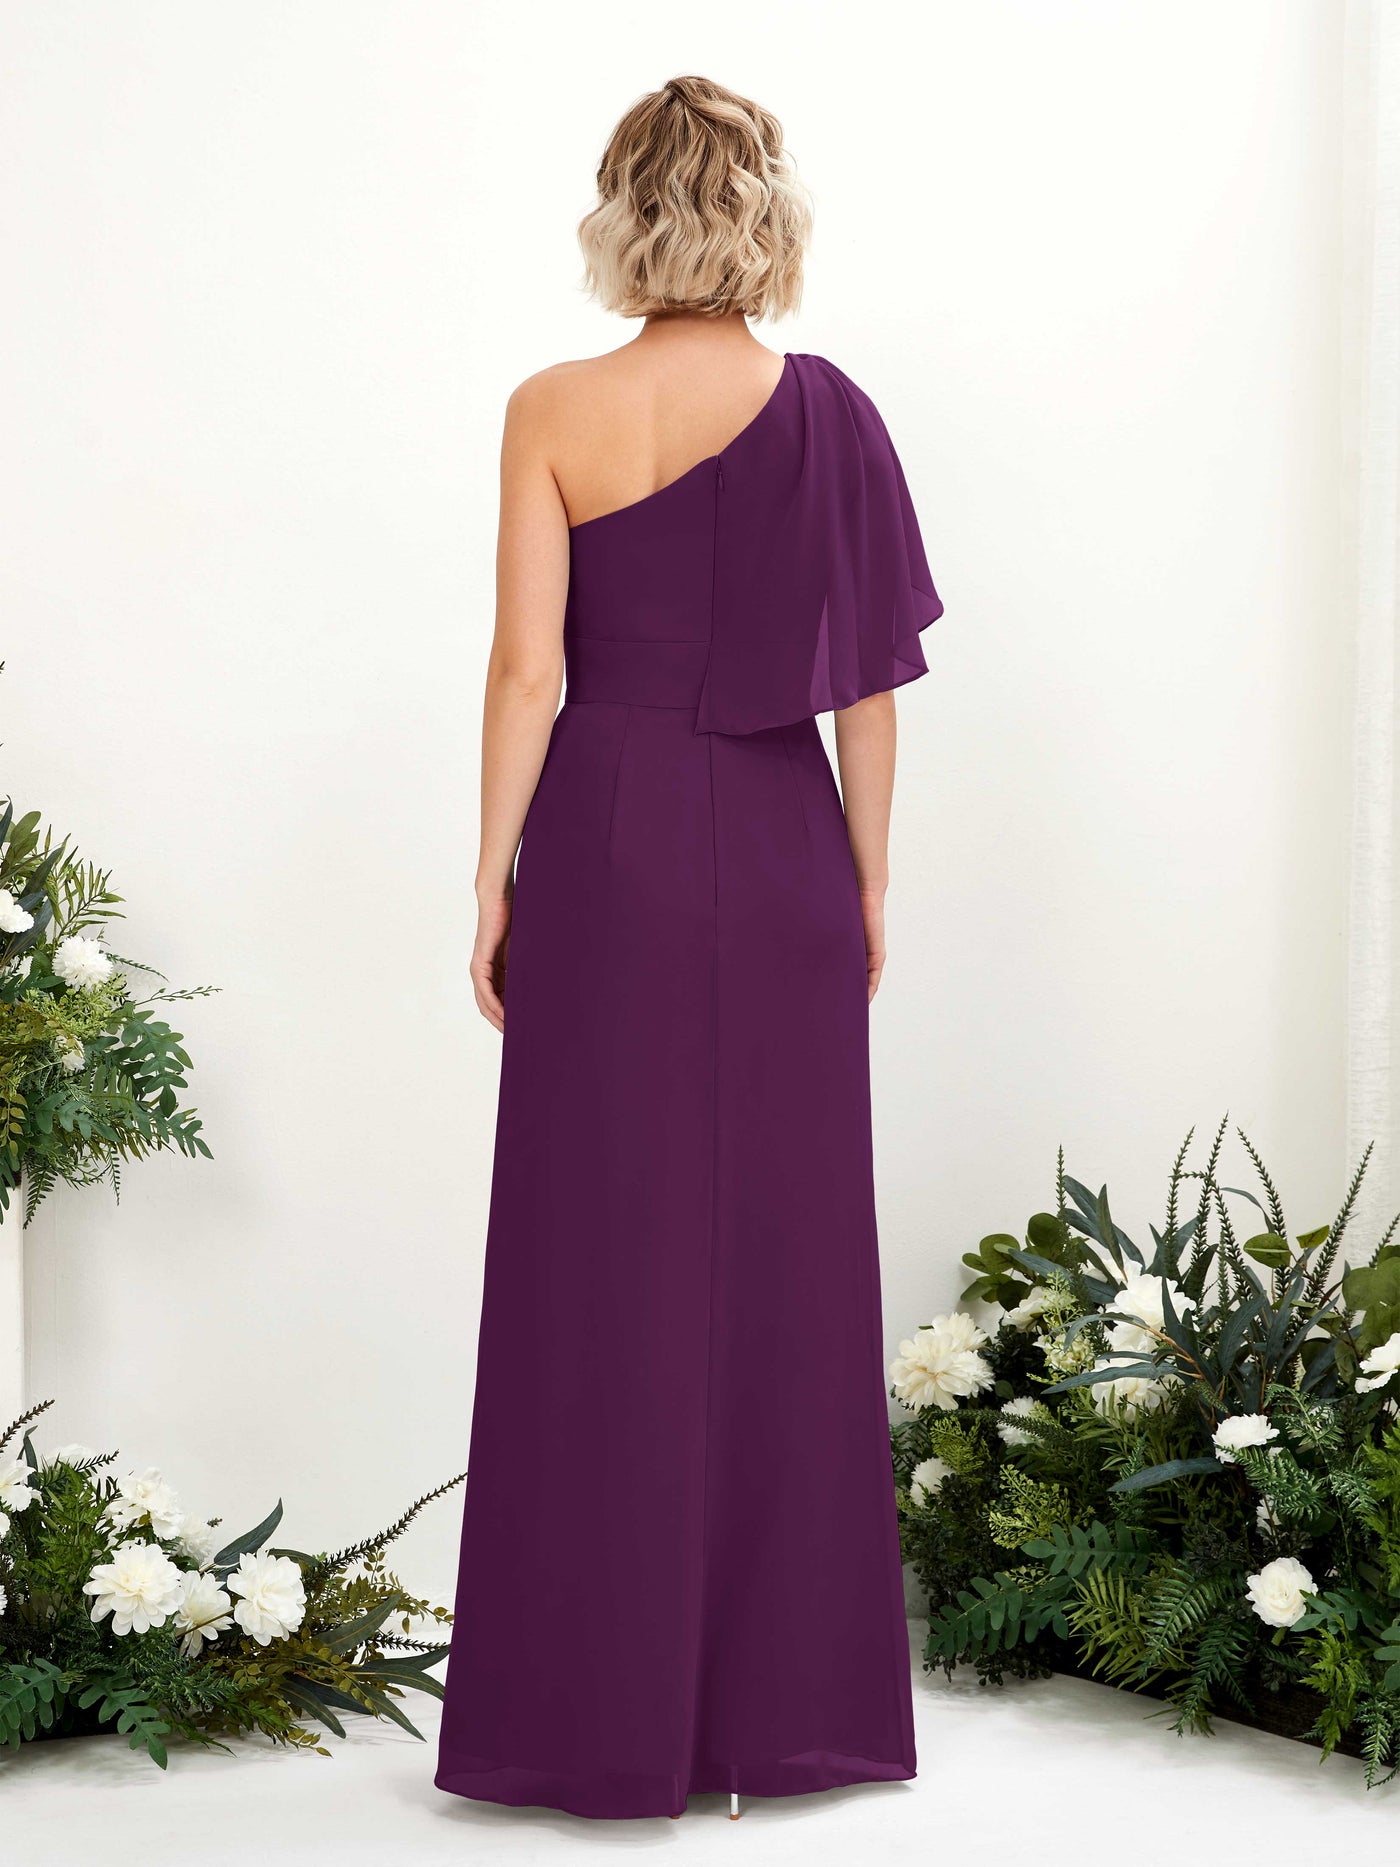 Grape Bridesmaid Dresses Bridesmaid Dress Ball Gown Chiffon Full Length Short Sleeves Wedding Party Dress (81223731)#color_grape